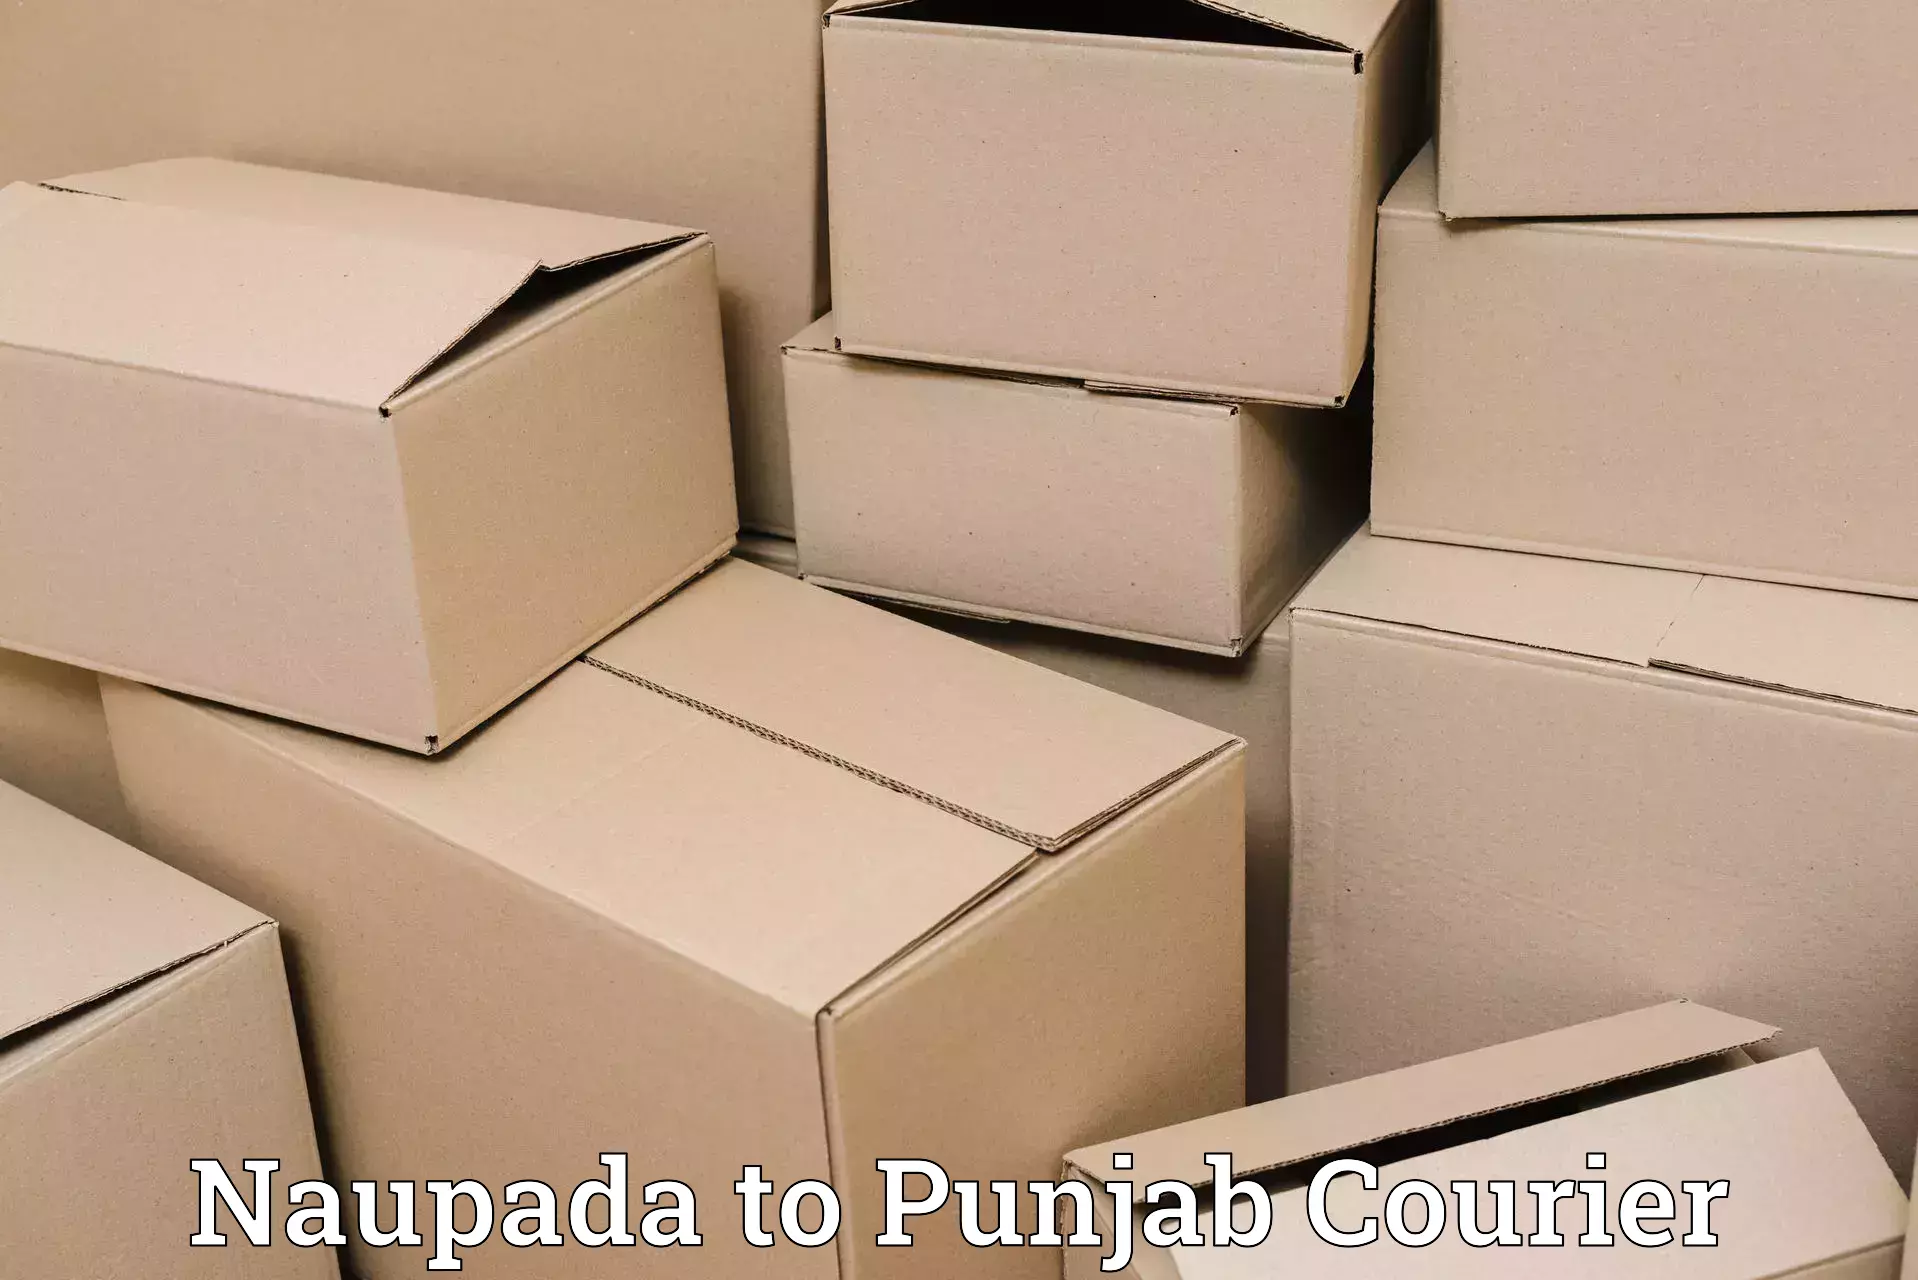 On-call courier service Naupada to Punjab